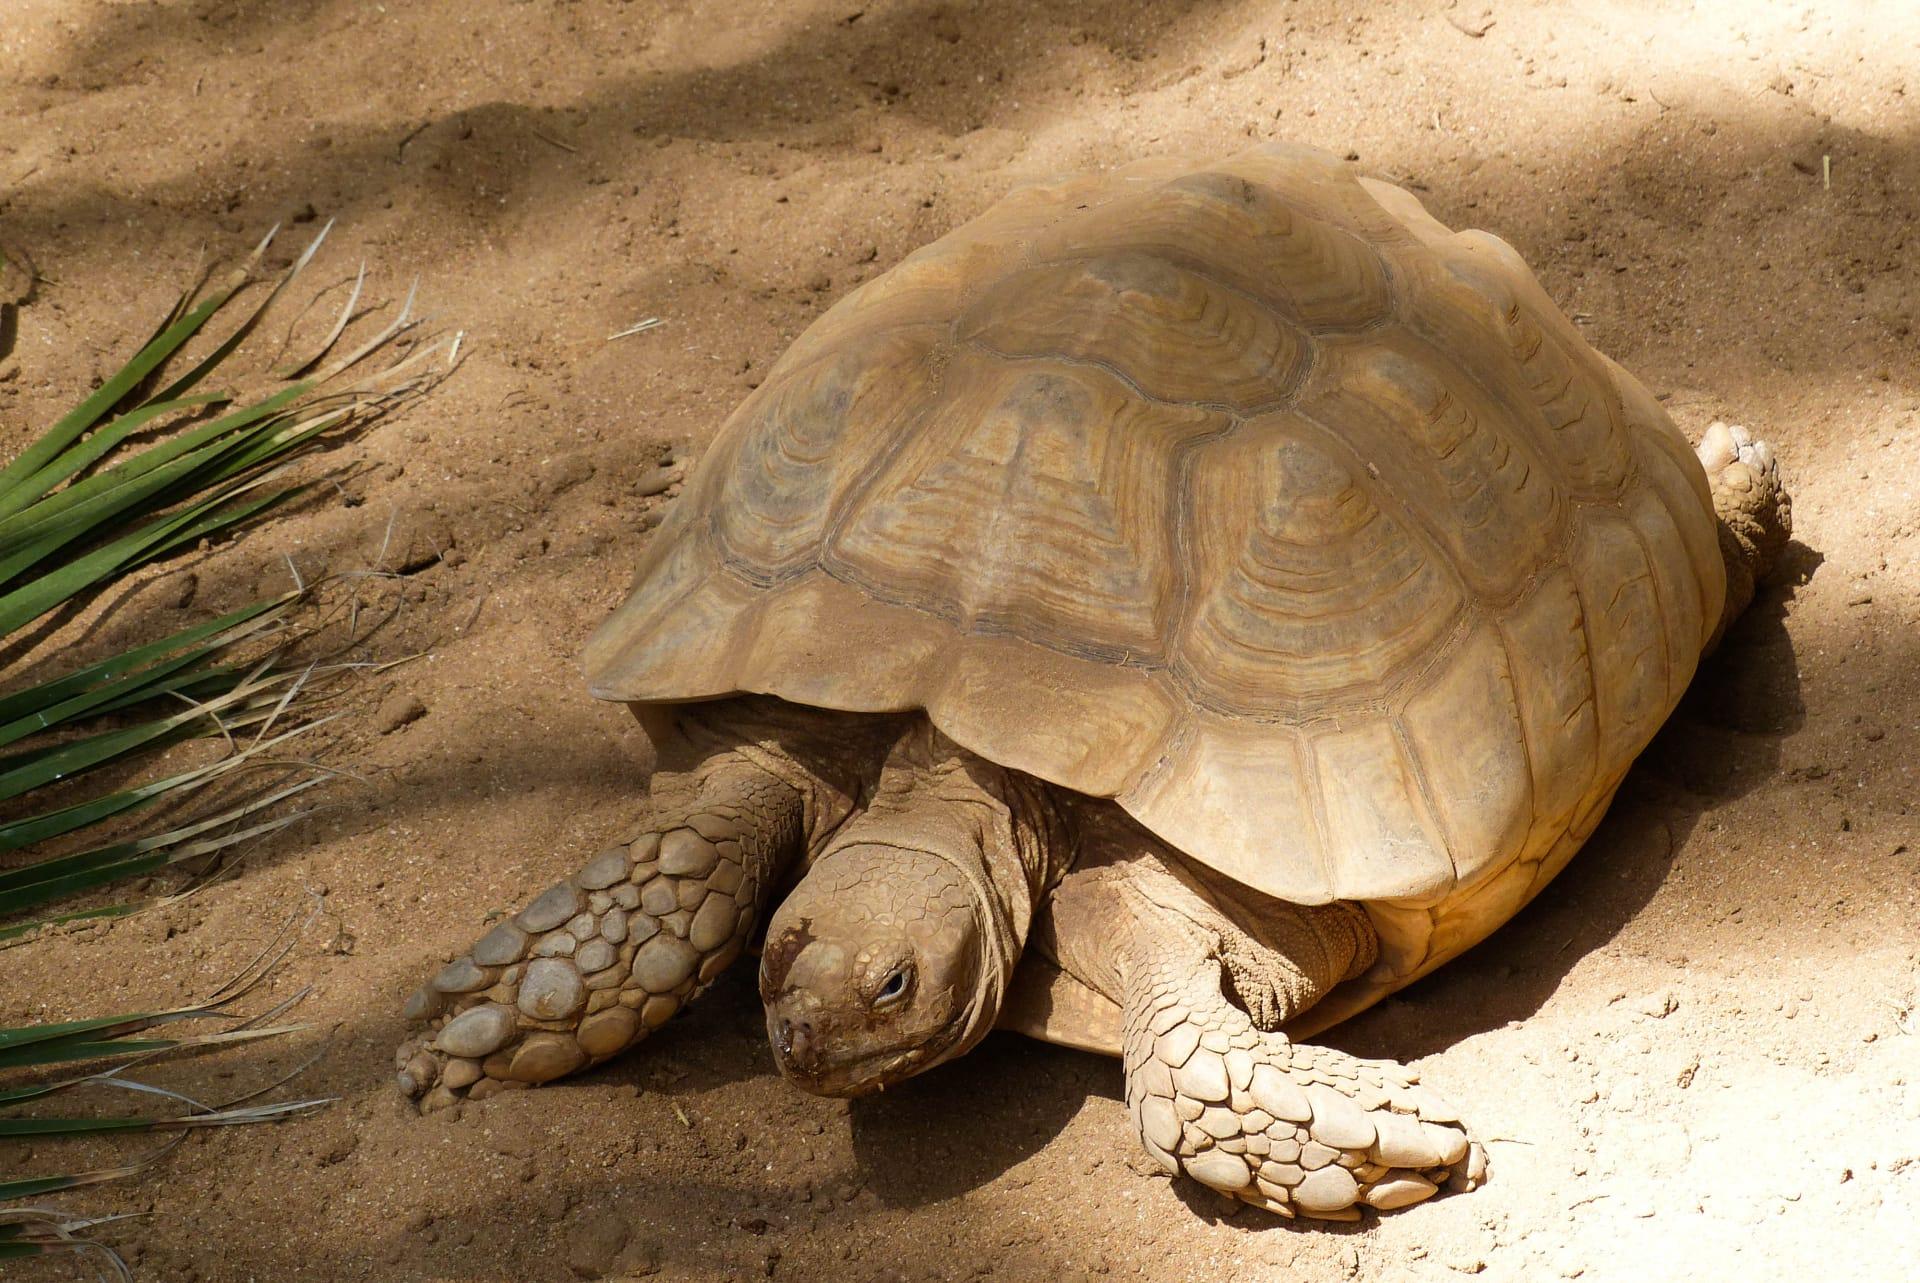 Western desert tortoise pictures